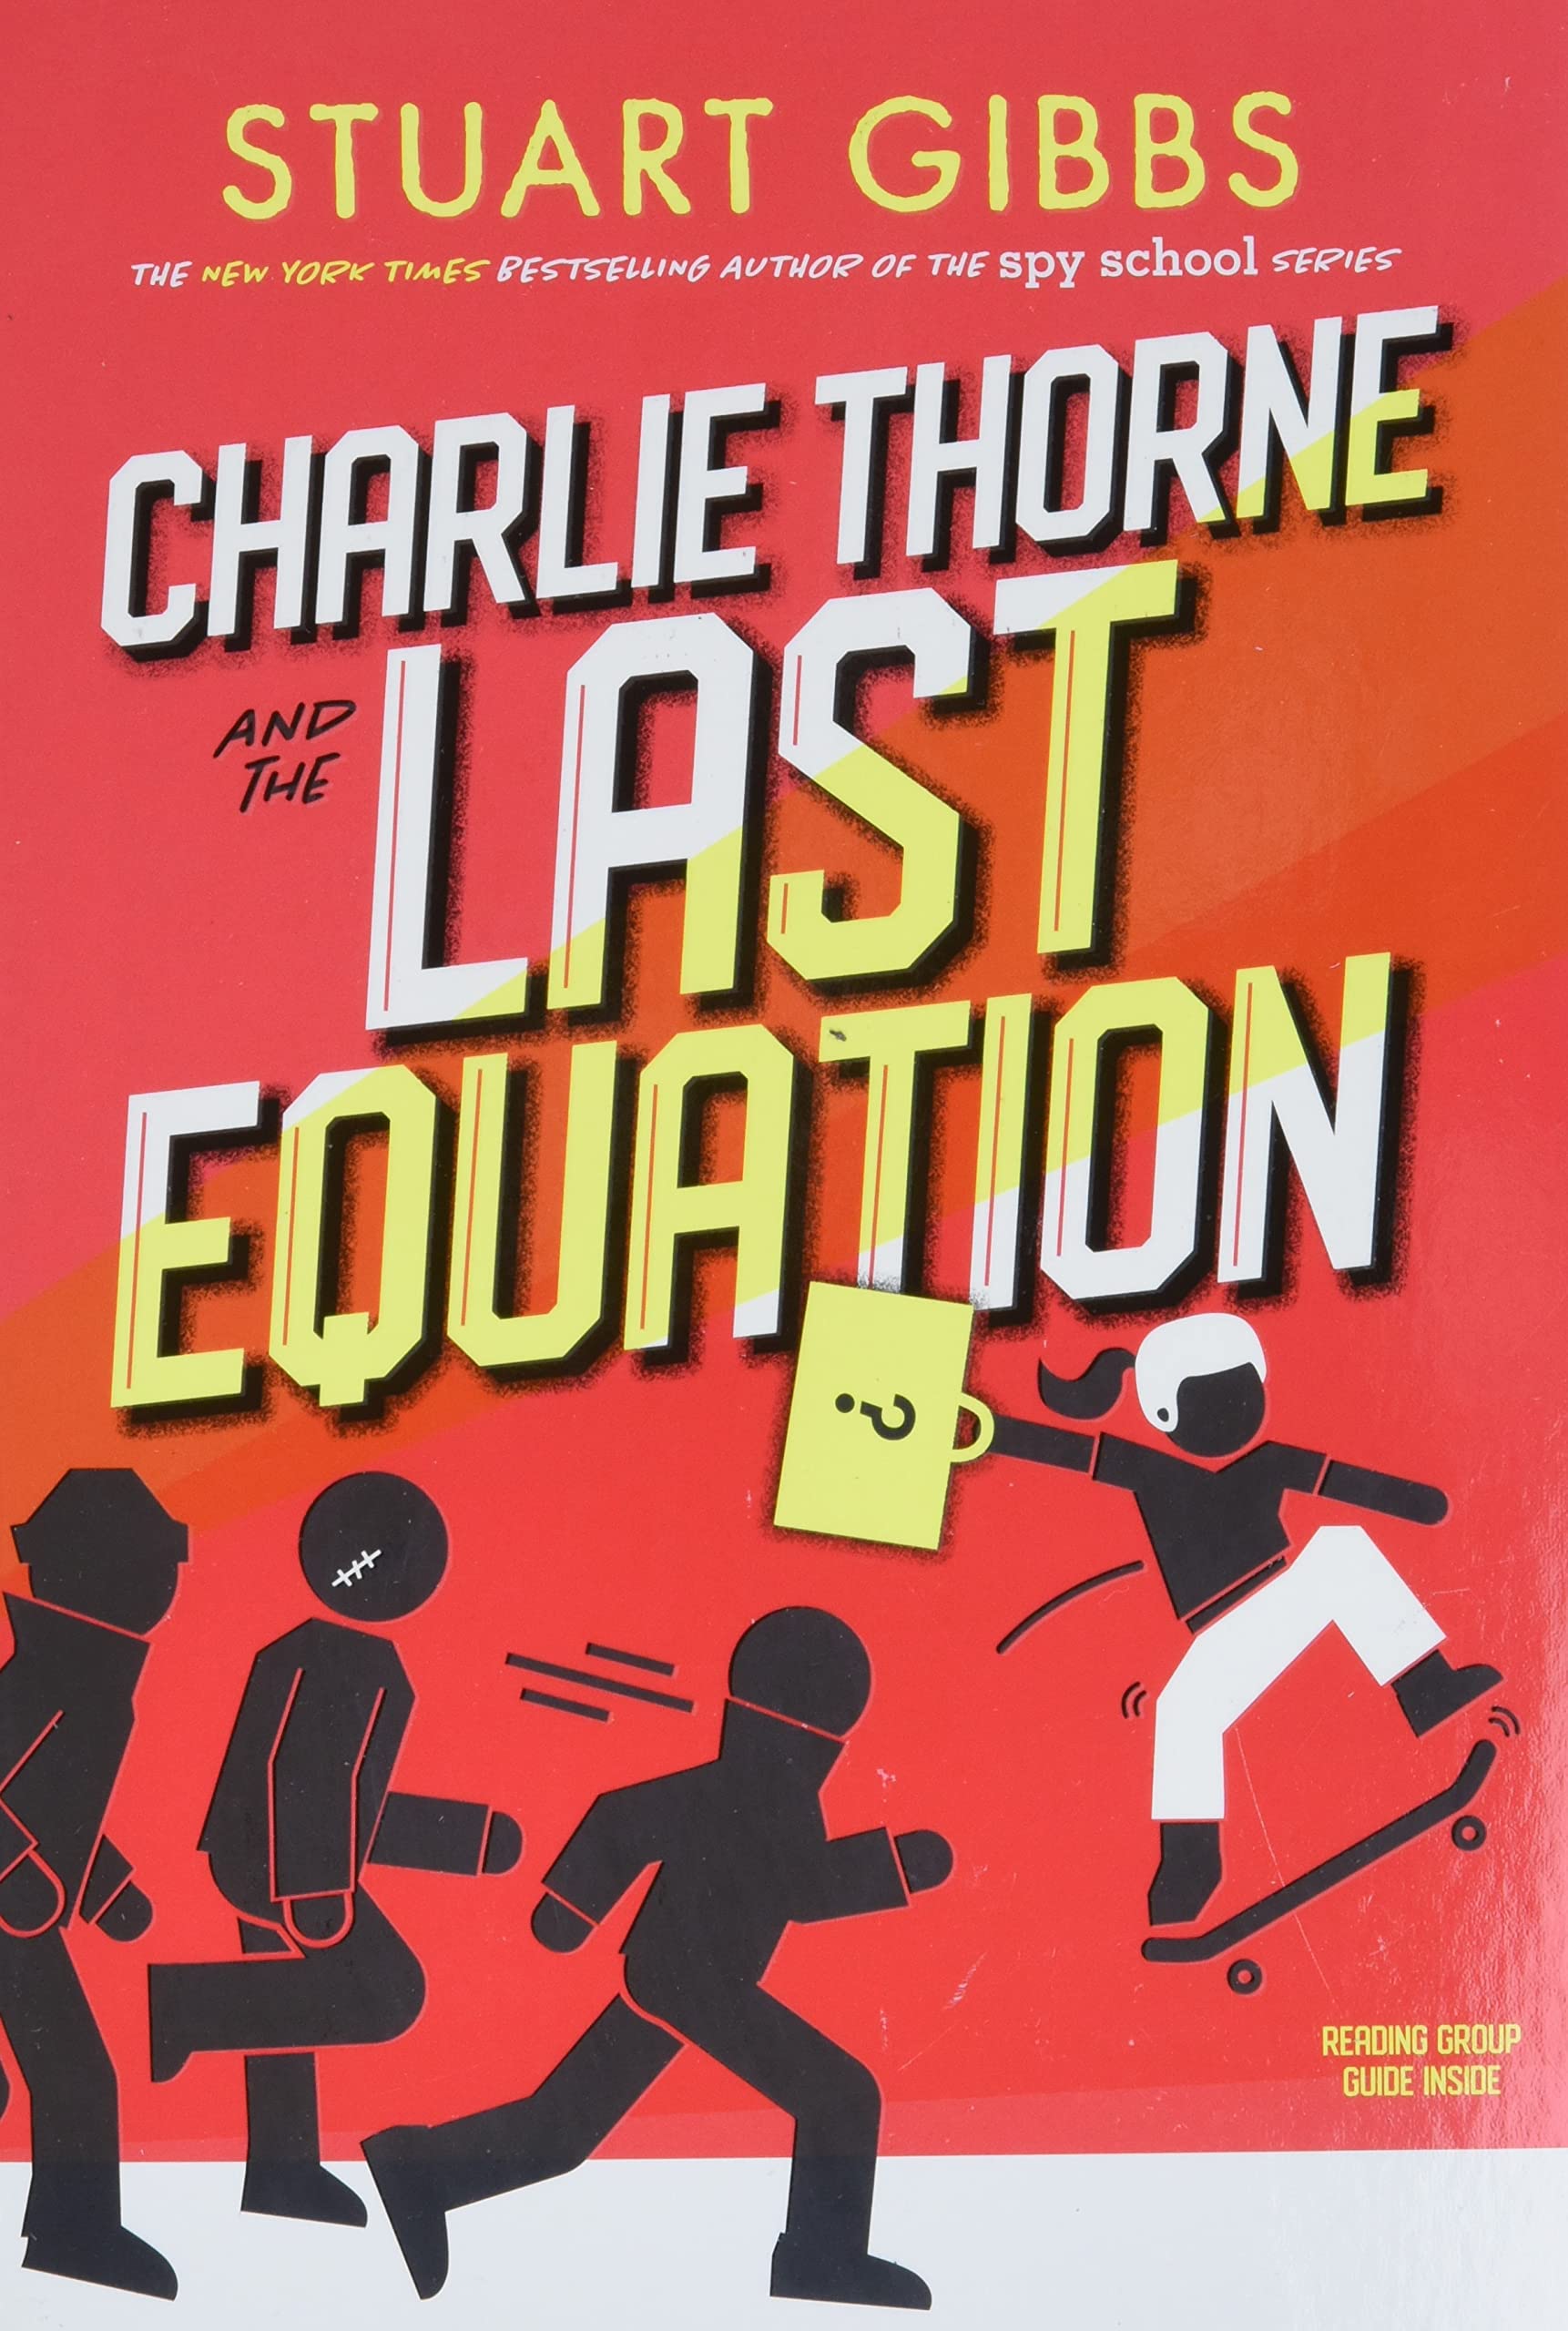 Charlie Thorn